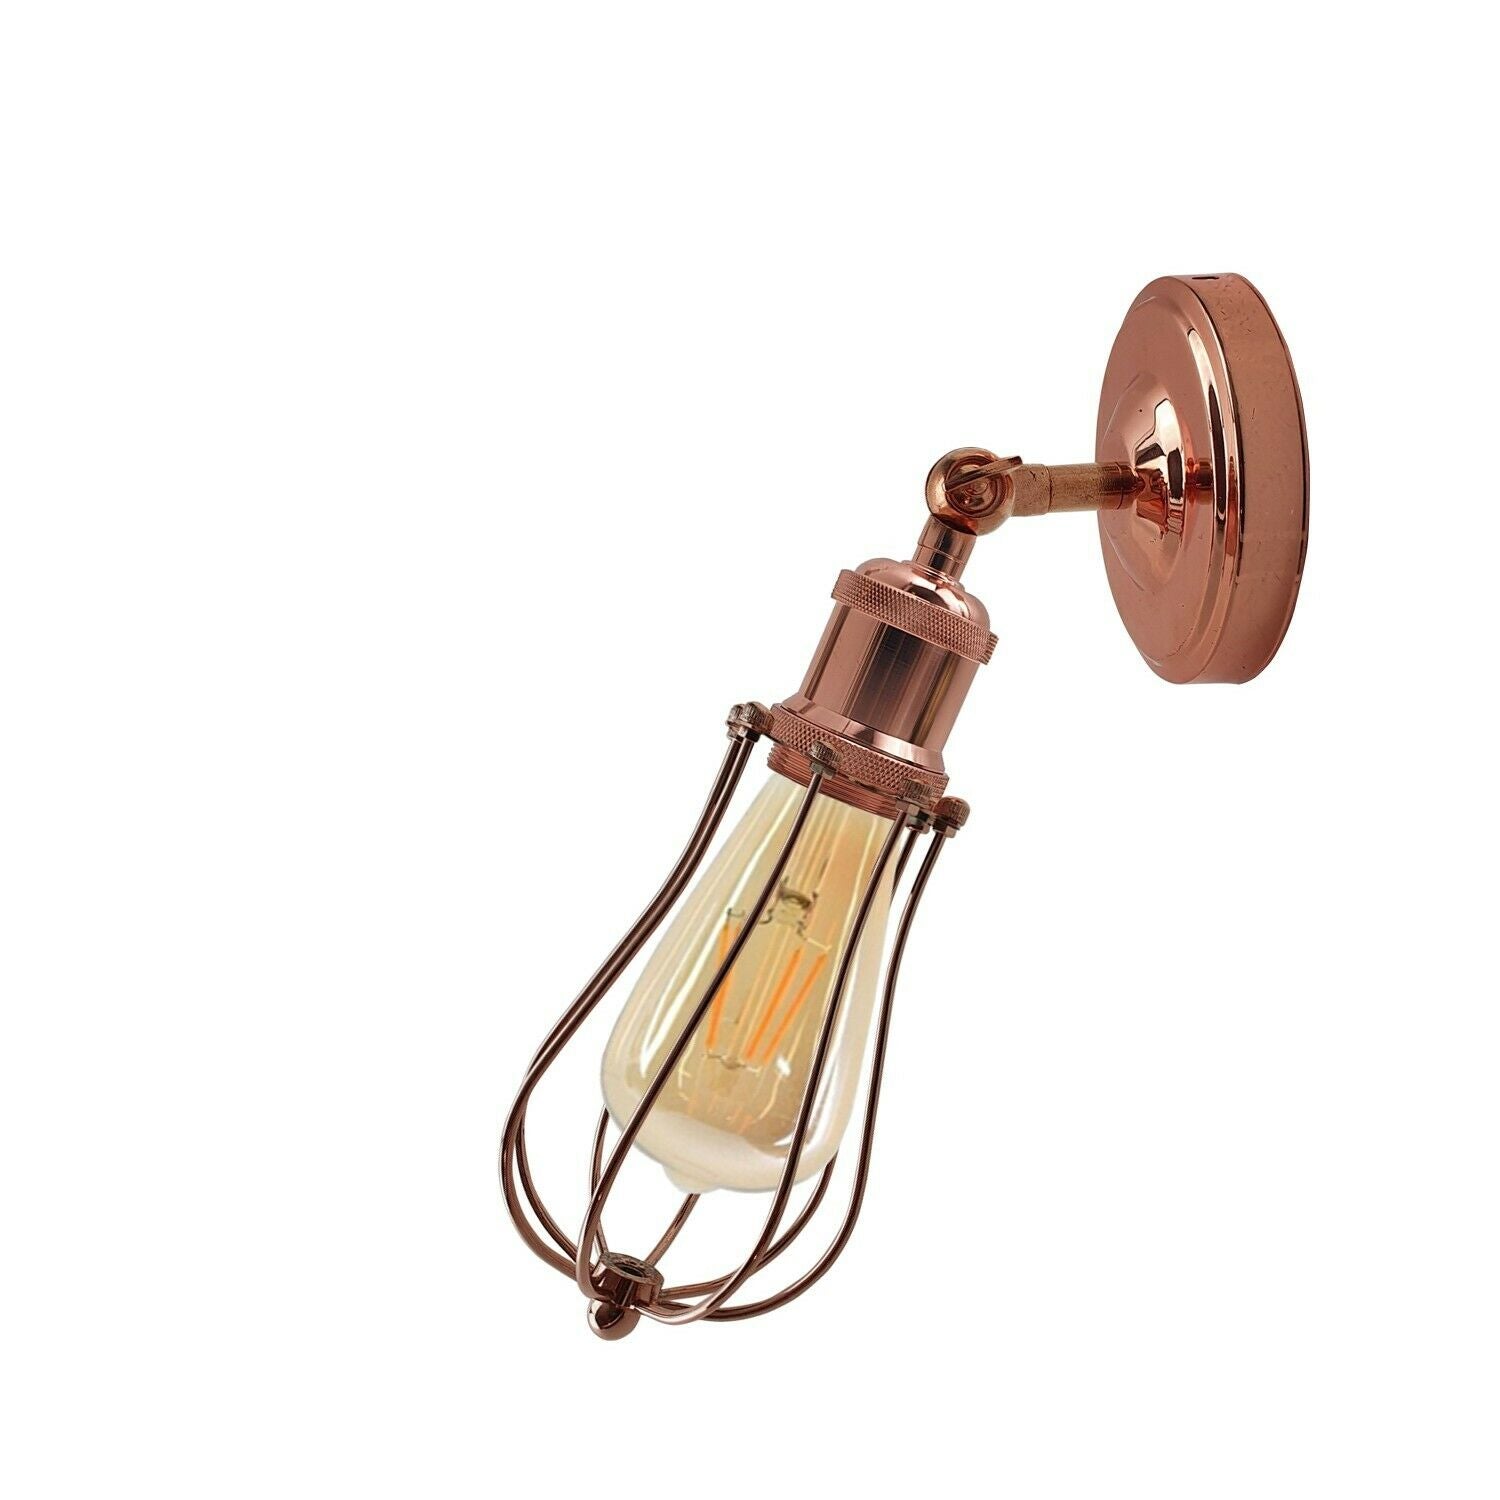 Industrial Vintage Retro Rose Gold Sconce Wall Light Lamp Fitting Fixture~3731 - LEDSone UK Ltd